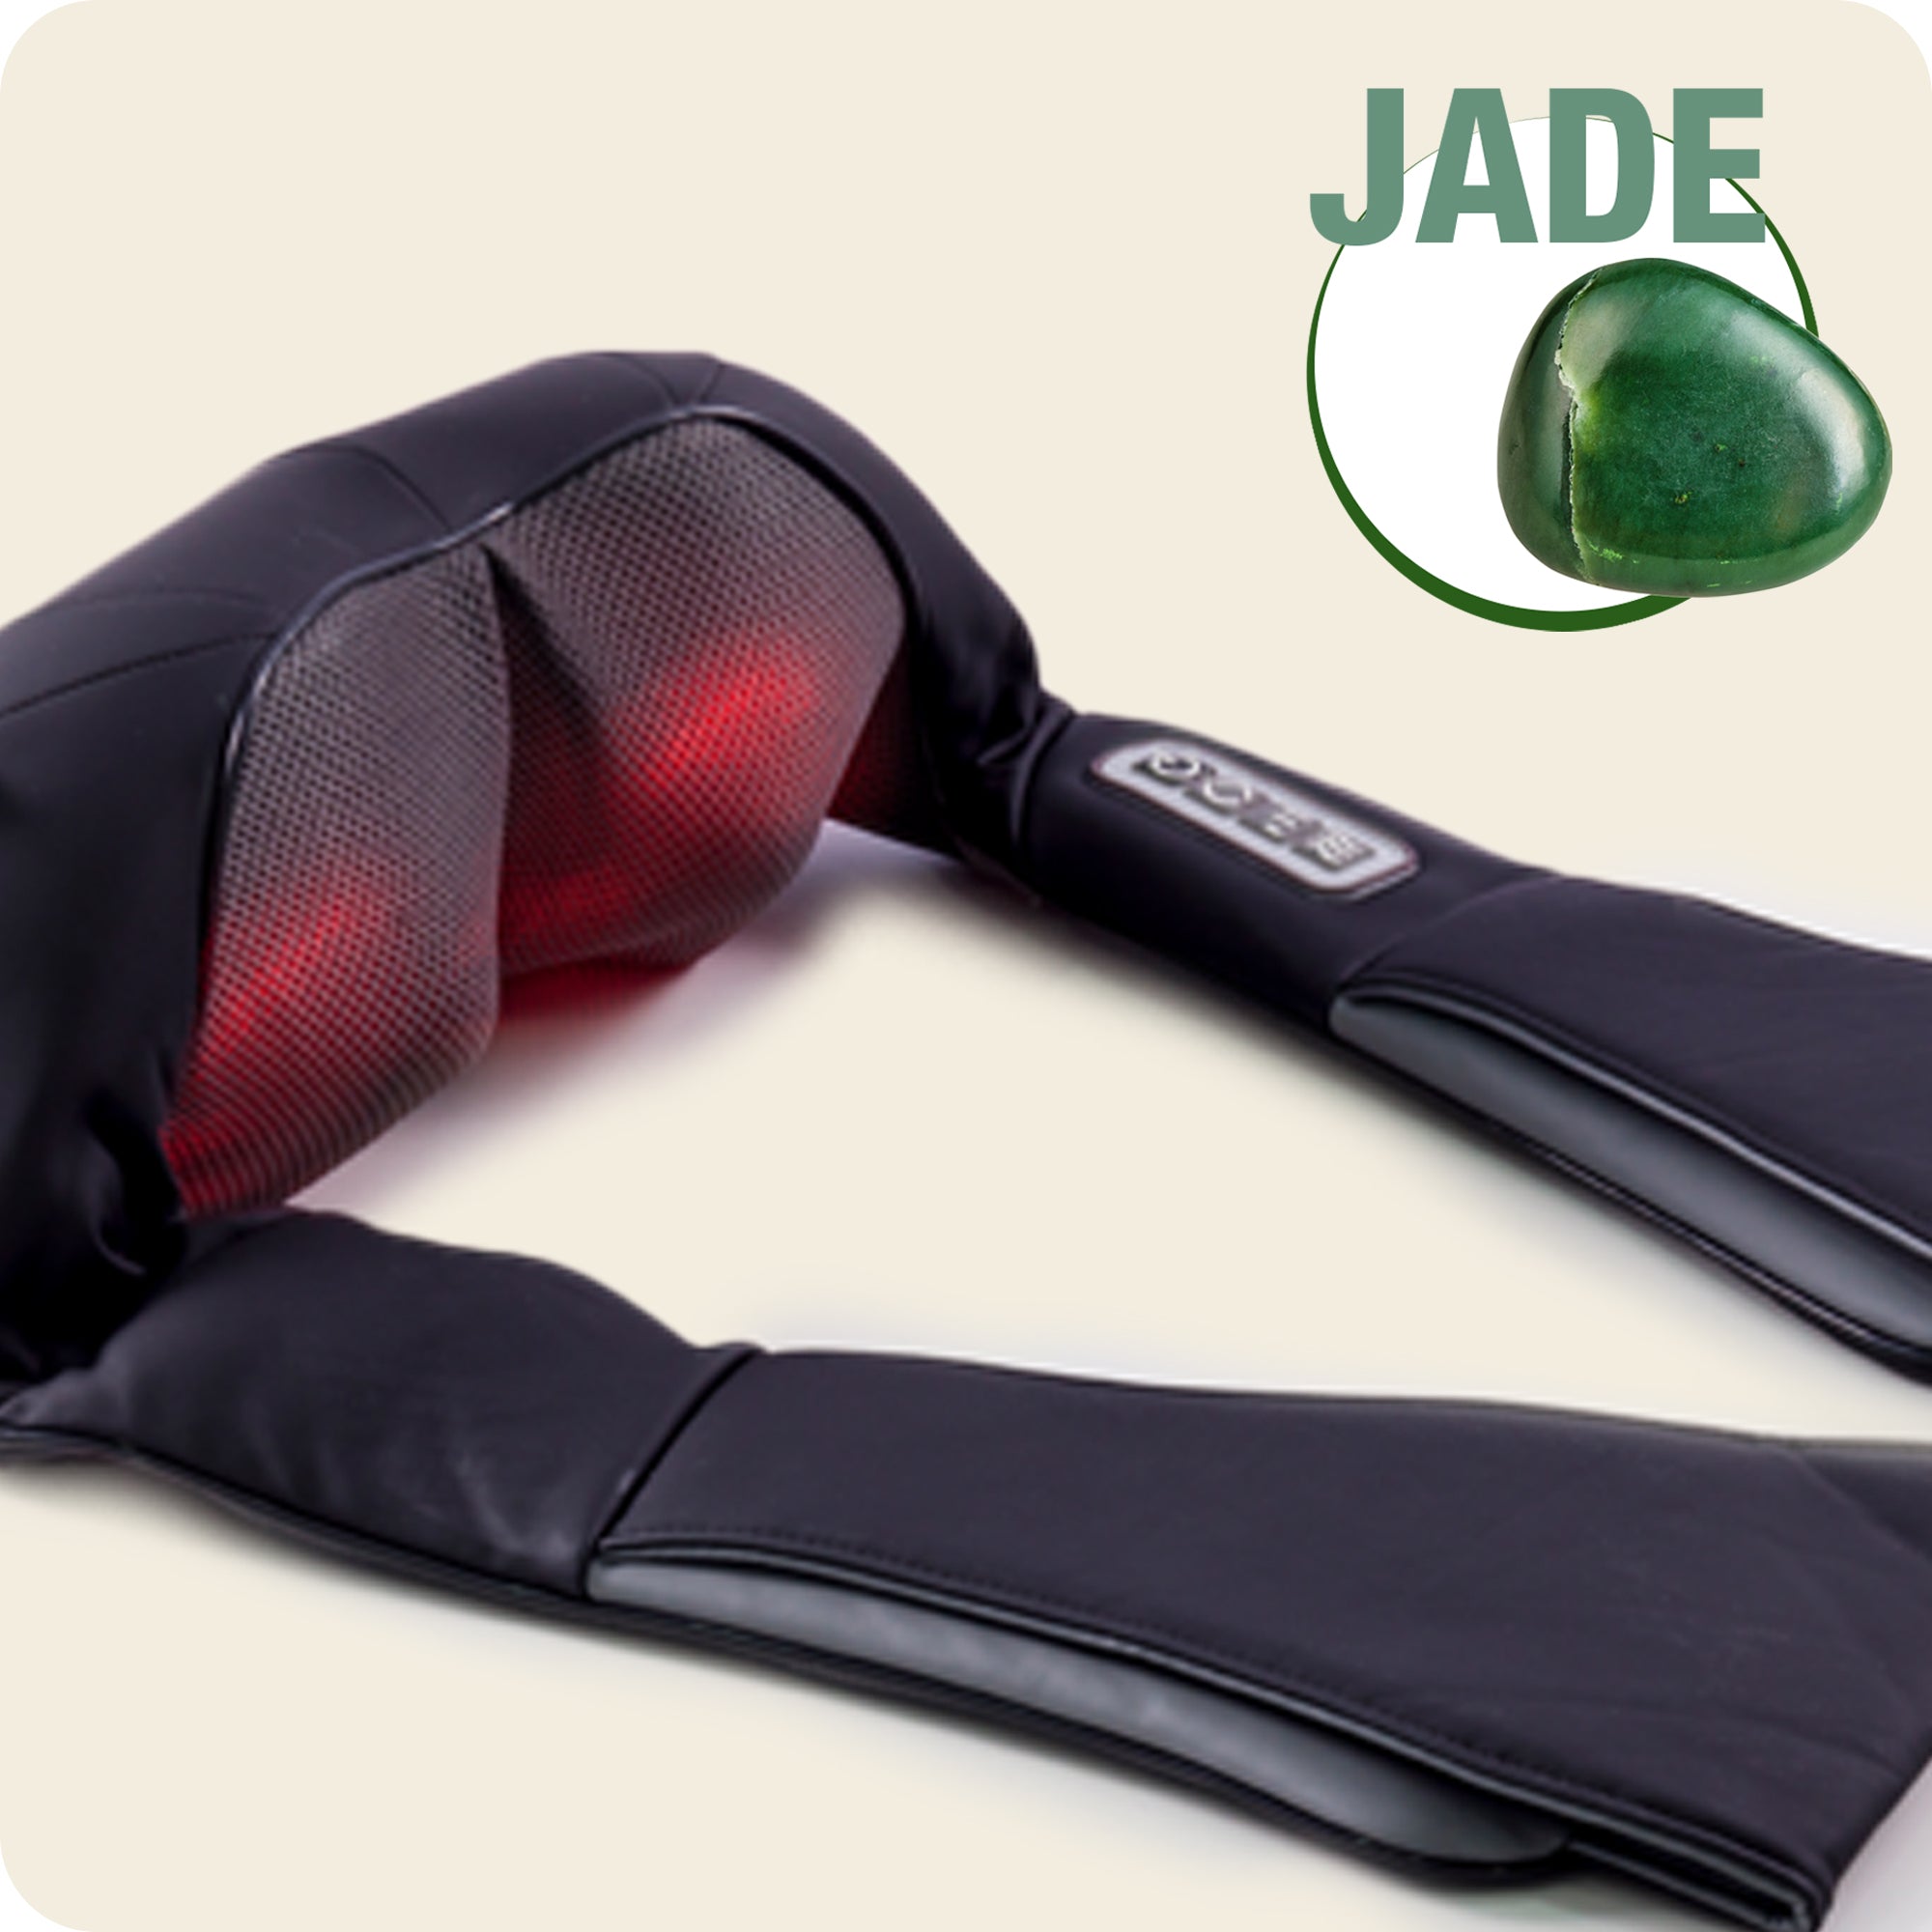 massager with 8 massage nodes, including 2 nodes covered in jade